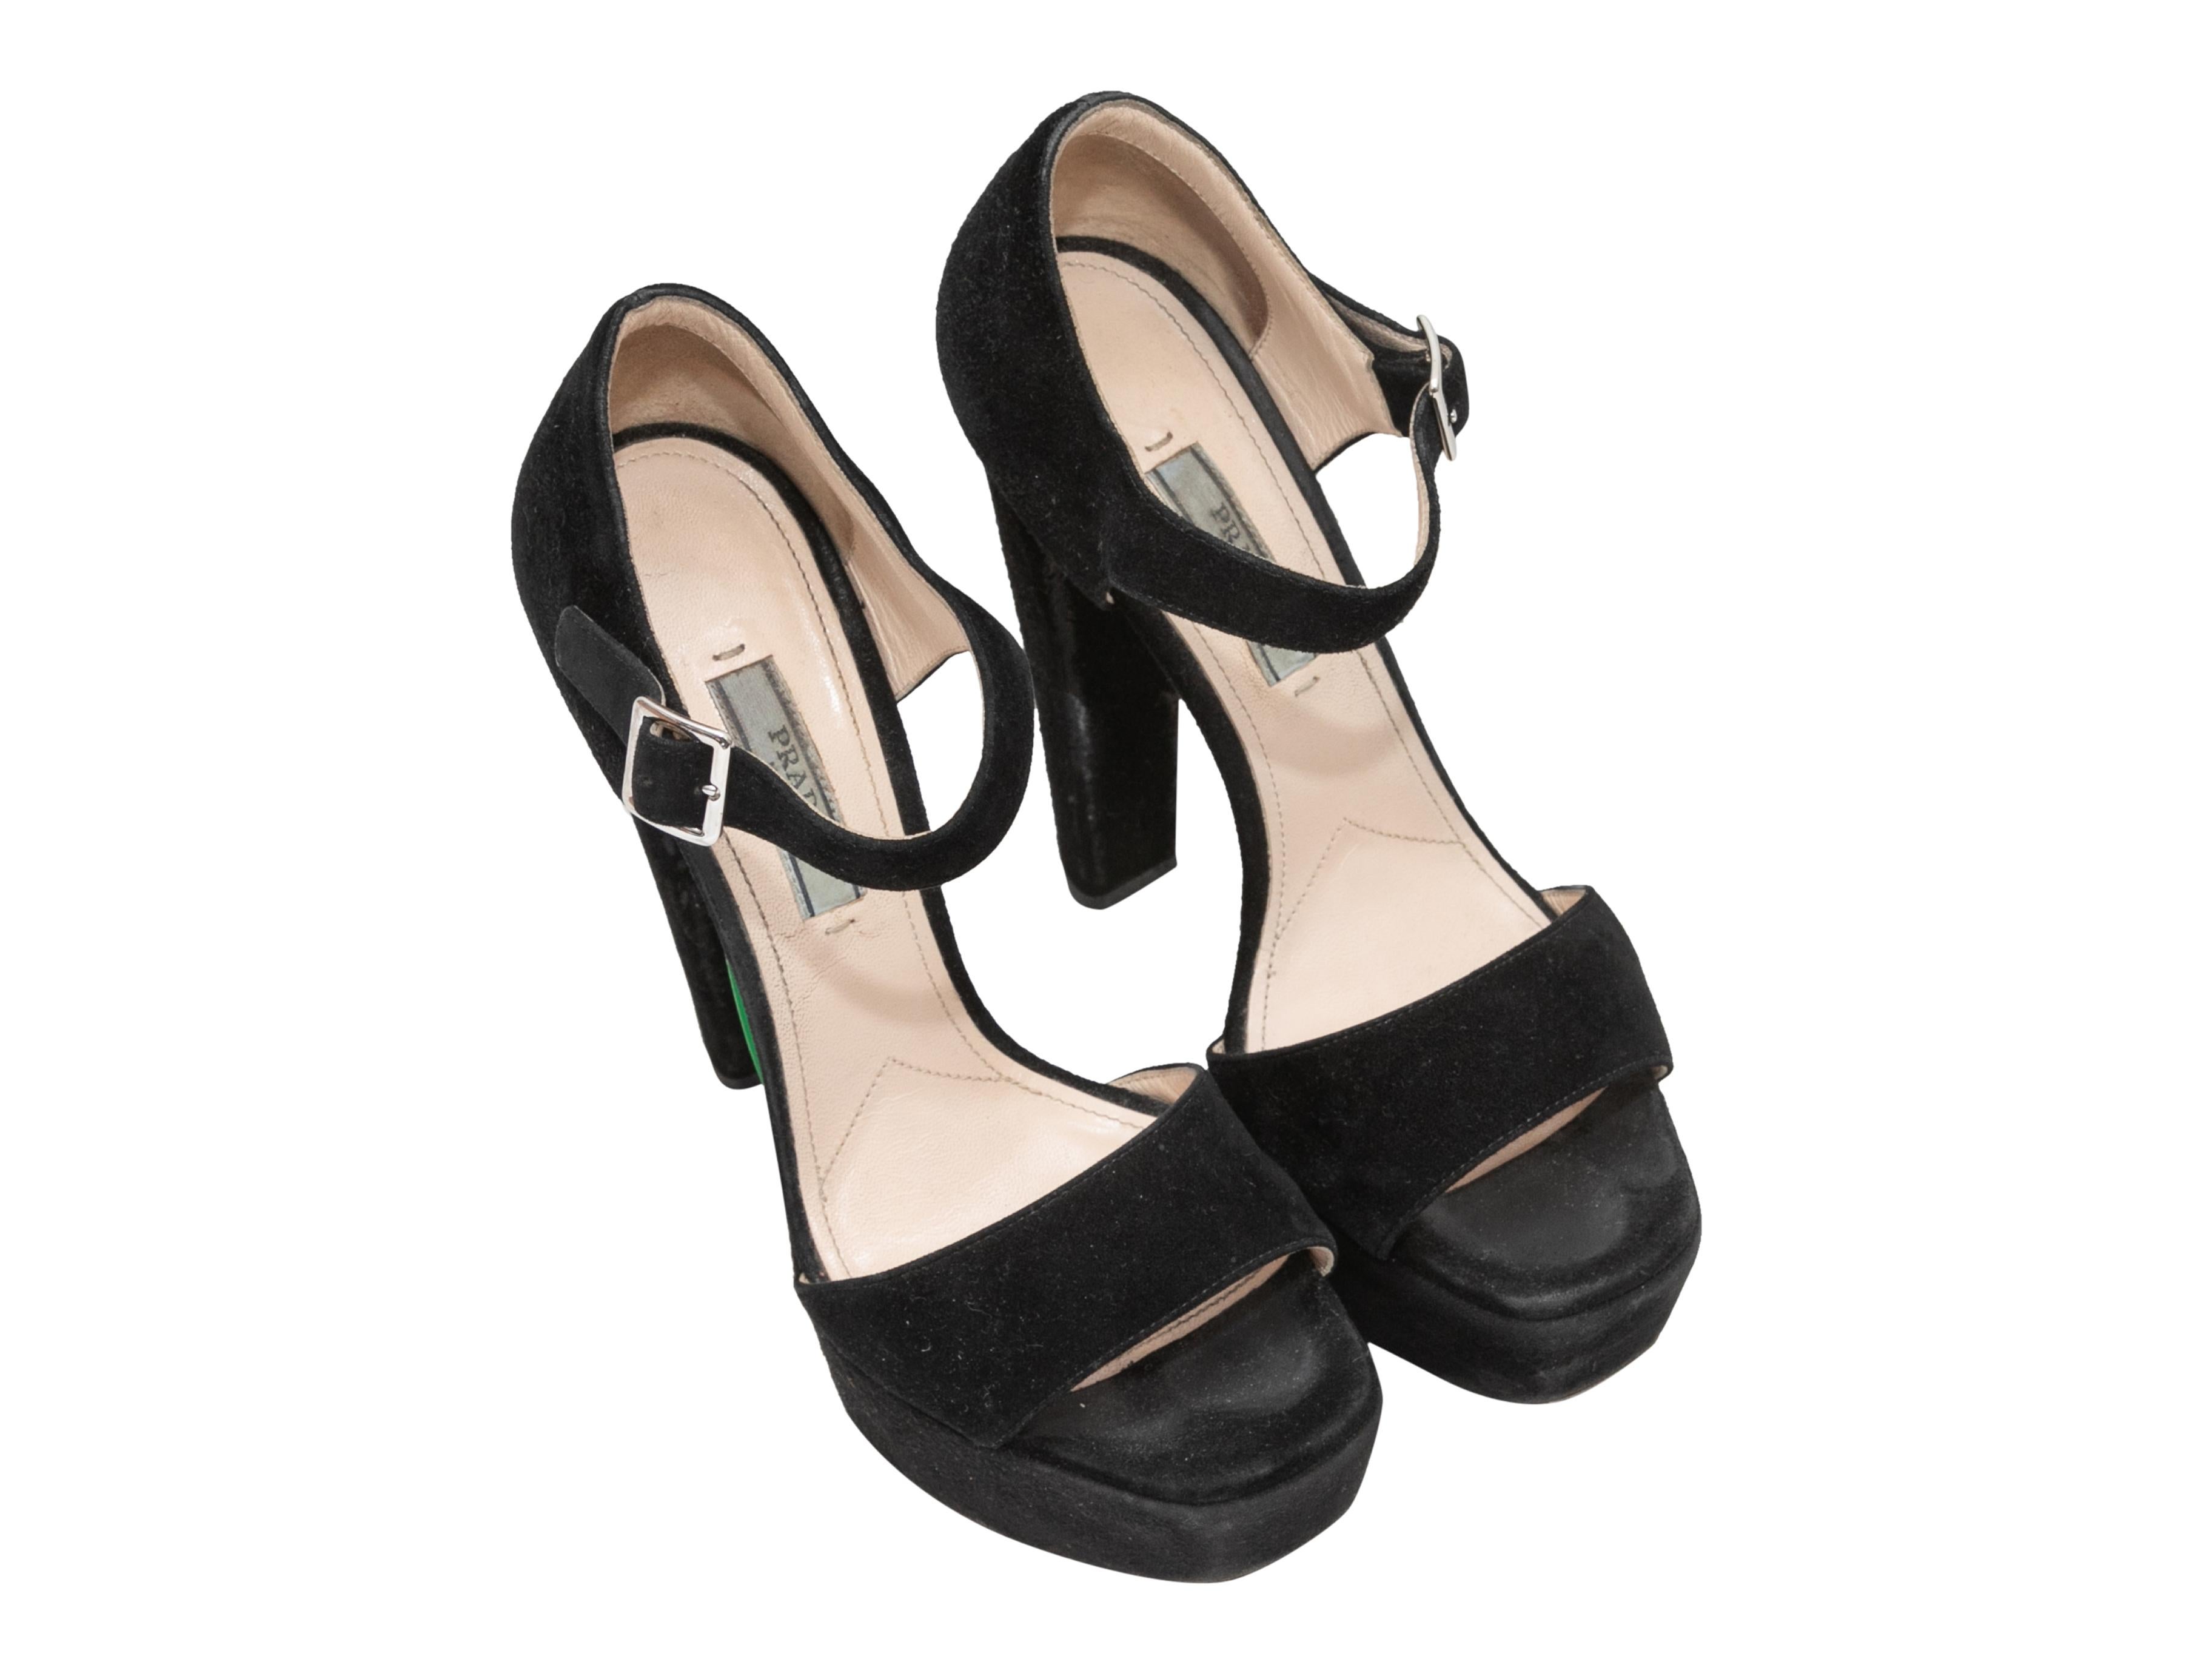 Black suede platform heeled sandals by Prada. Buckle closures at ankle straps. 1.5